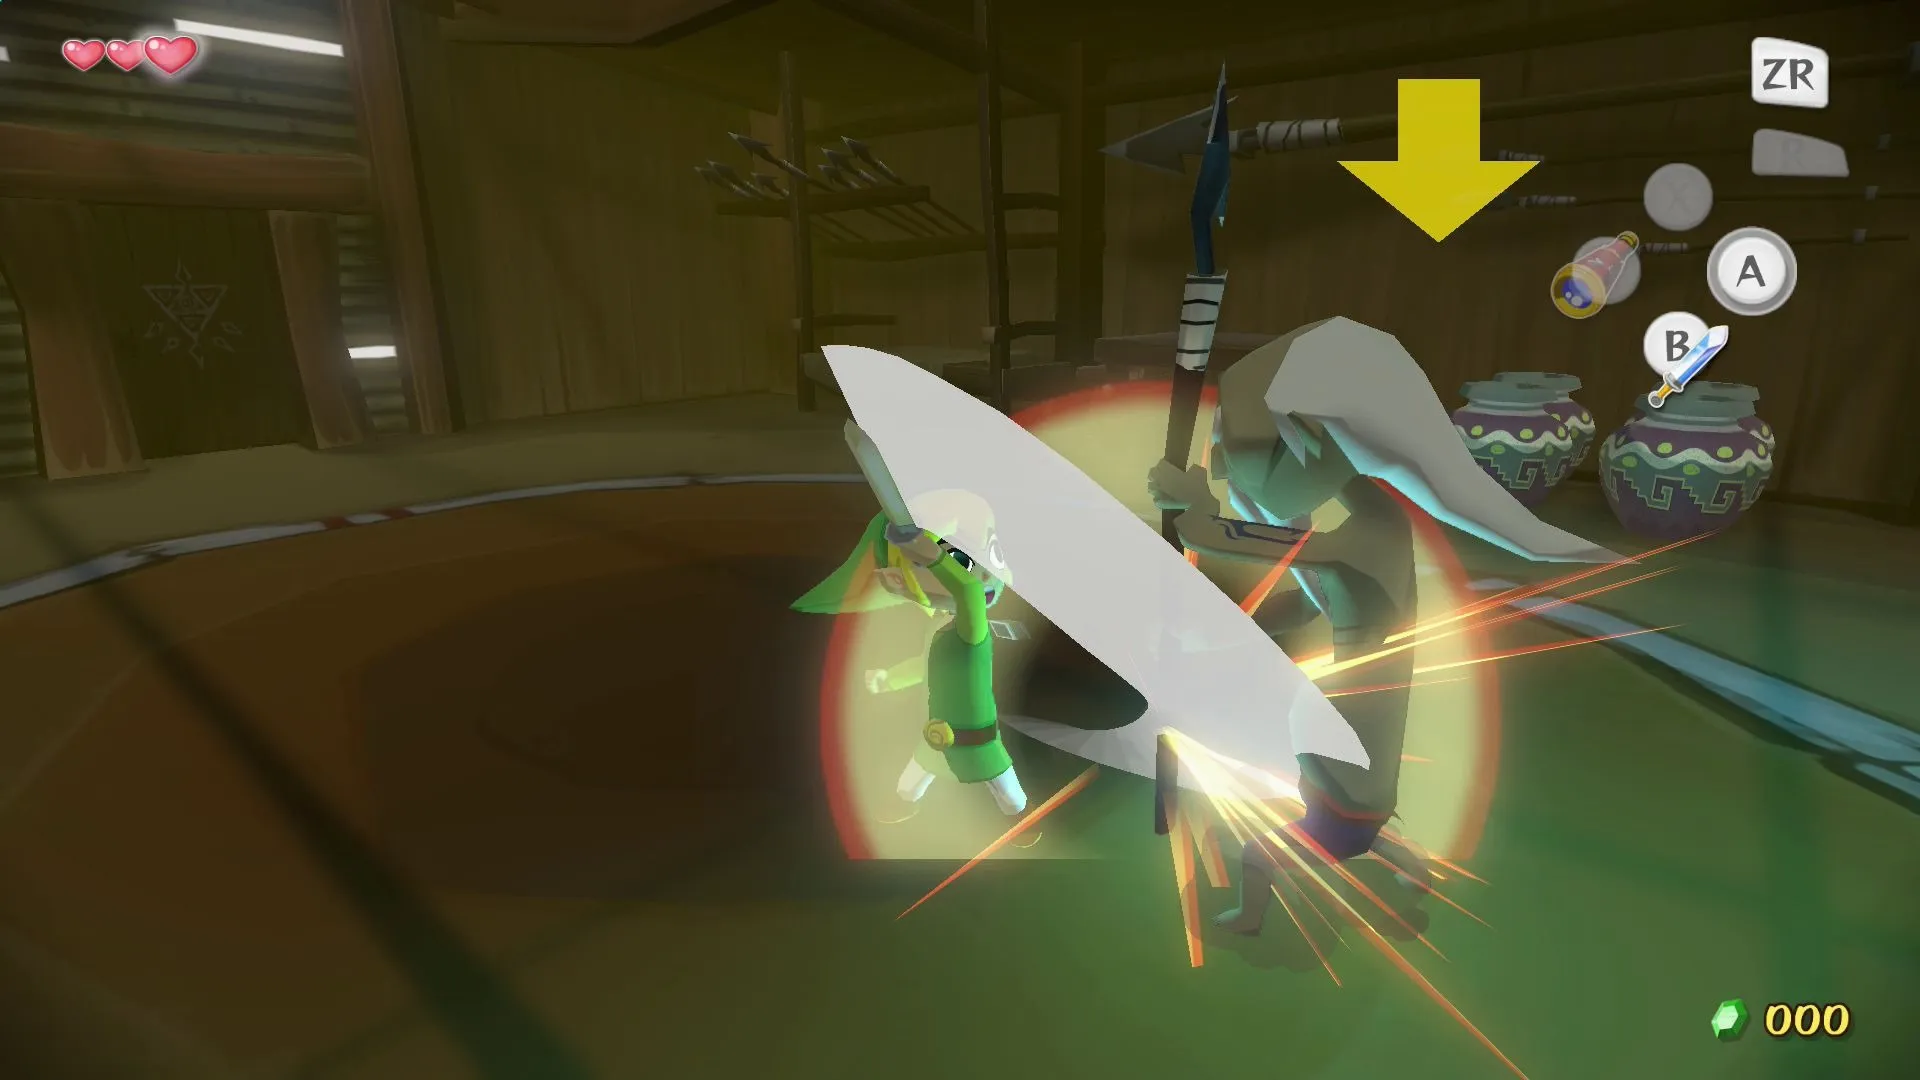 Review: The Legend of Zelda: The Wind Waker HD – Destructoid